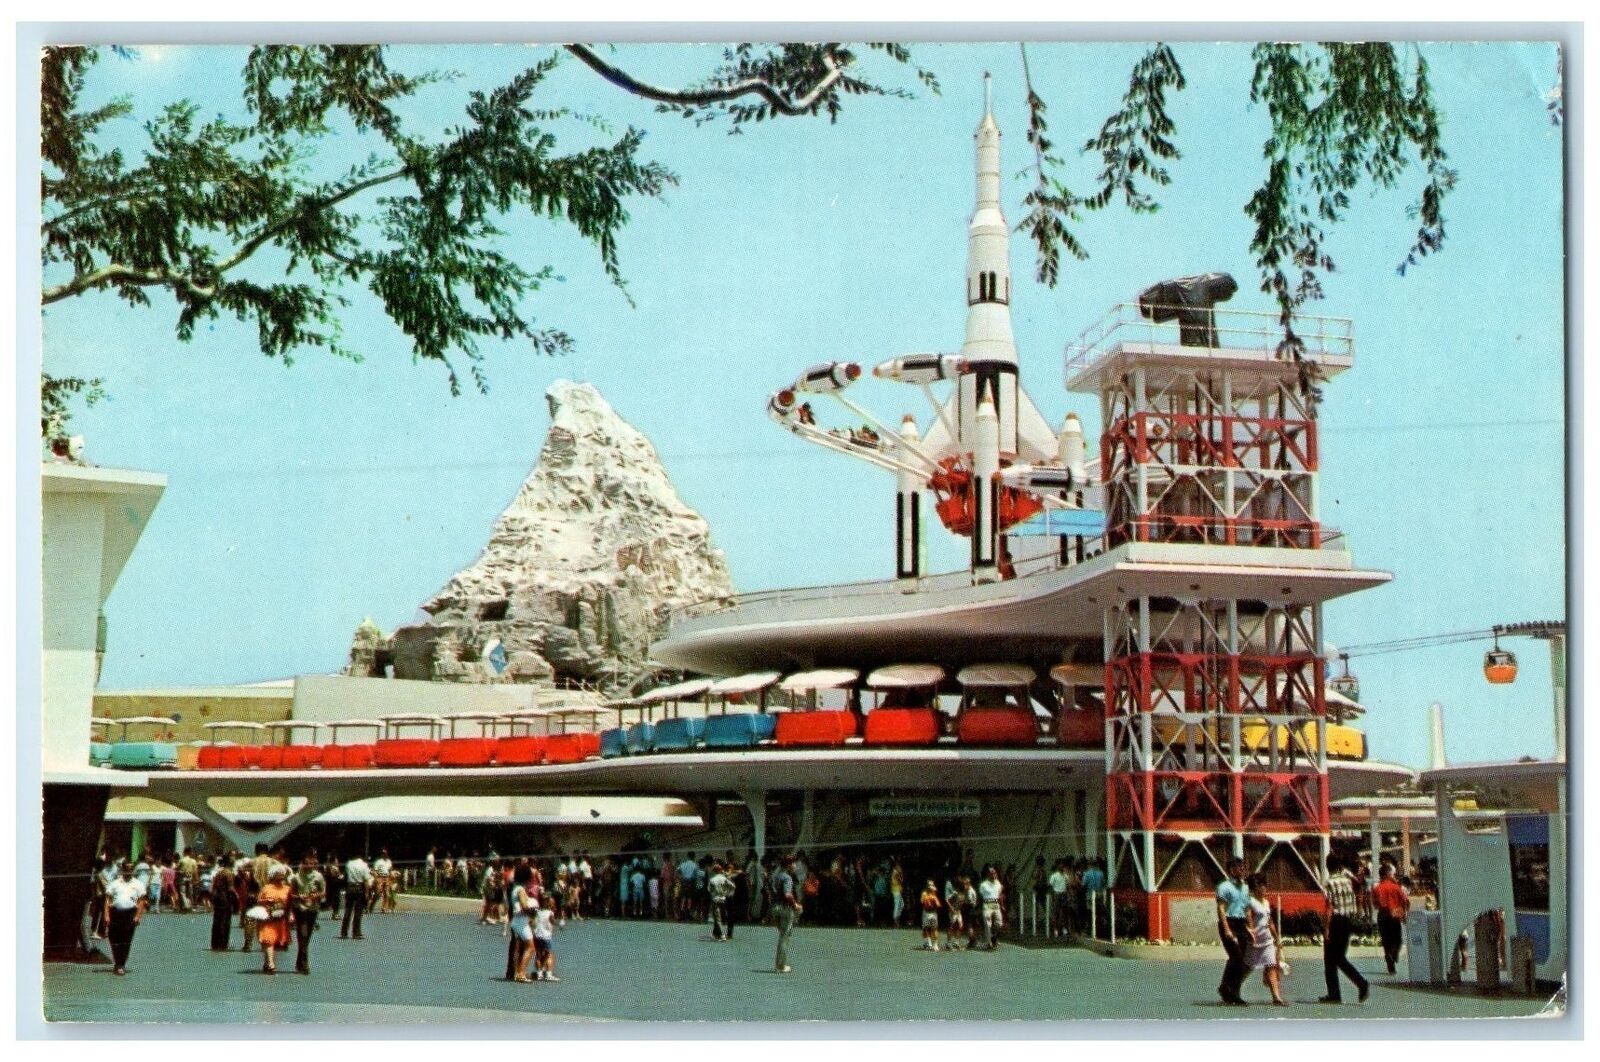 1968 Disneyland Tommorowland Soaring Rocket Jets Anaheim California CA Postcard